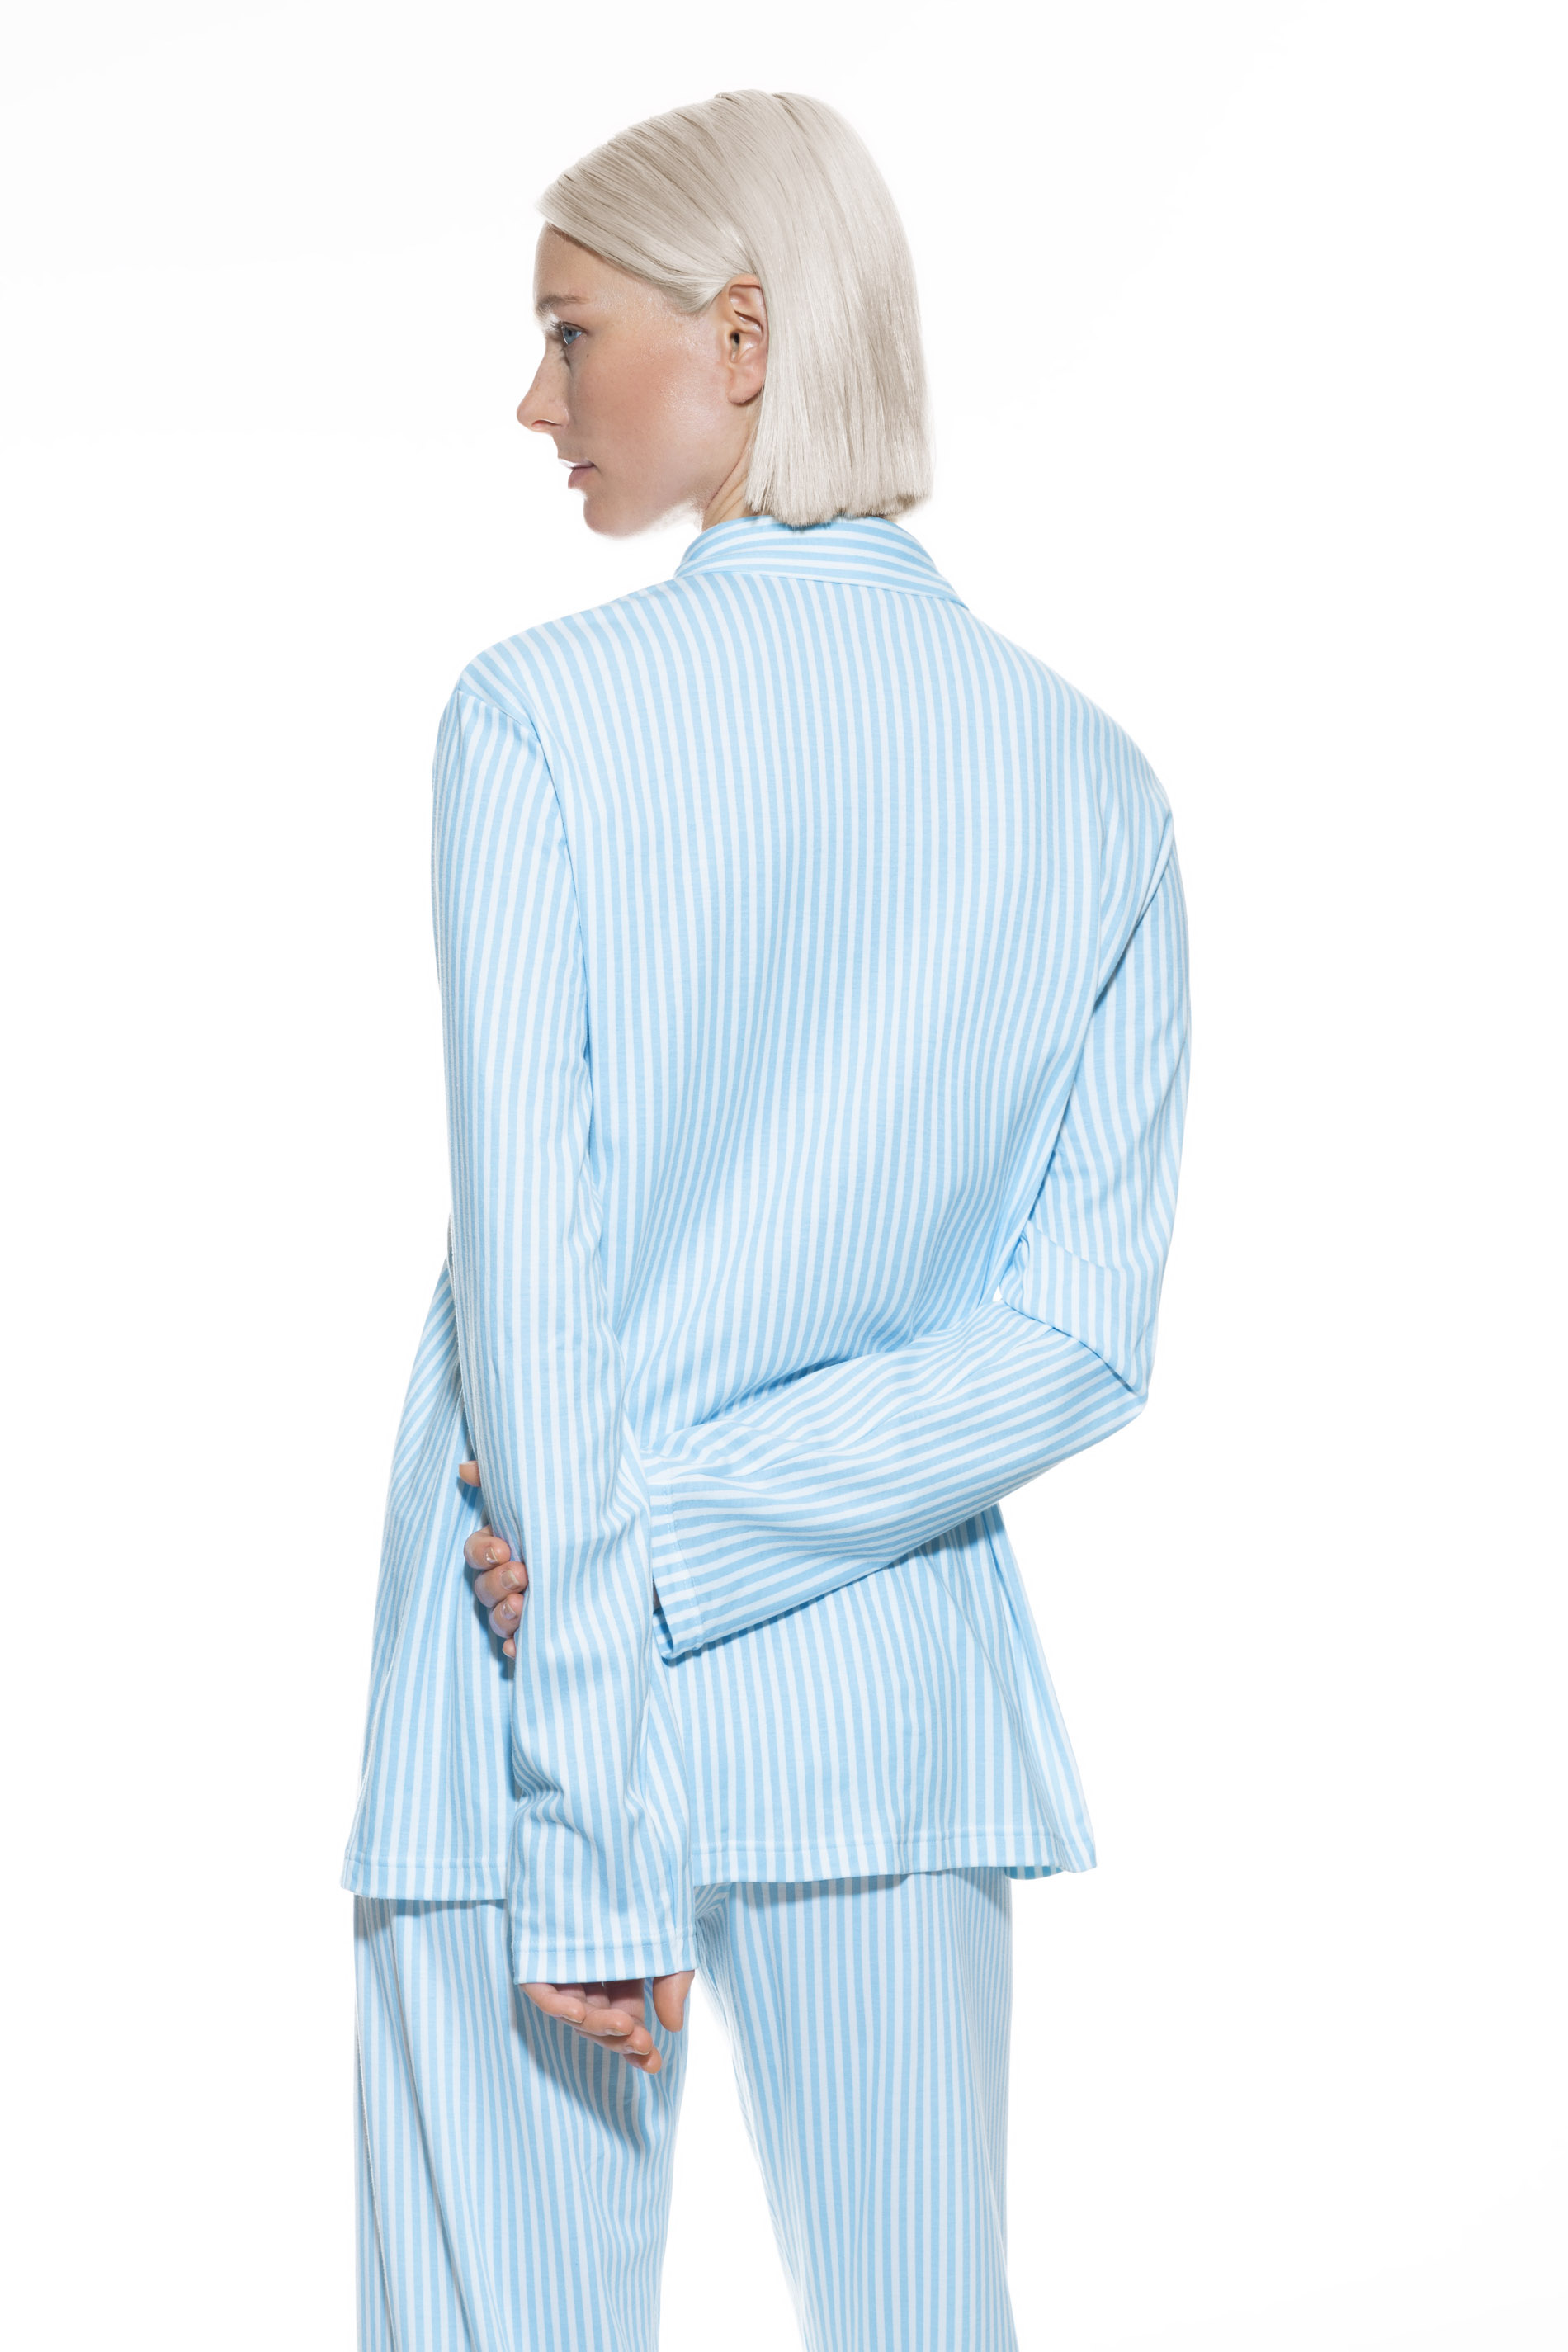 Pyjama shirt Dream Blue Serie Sleepsation Rear View | mey®